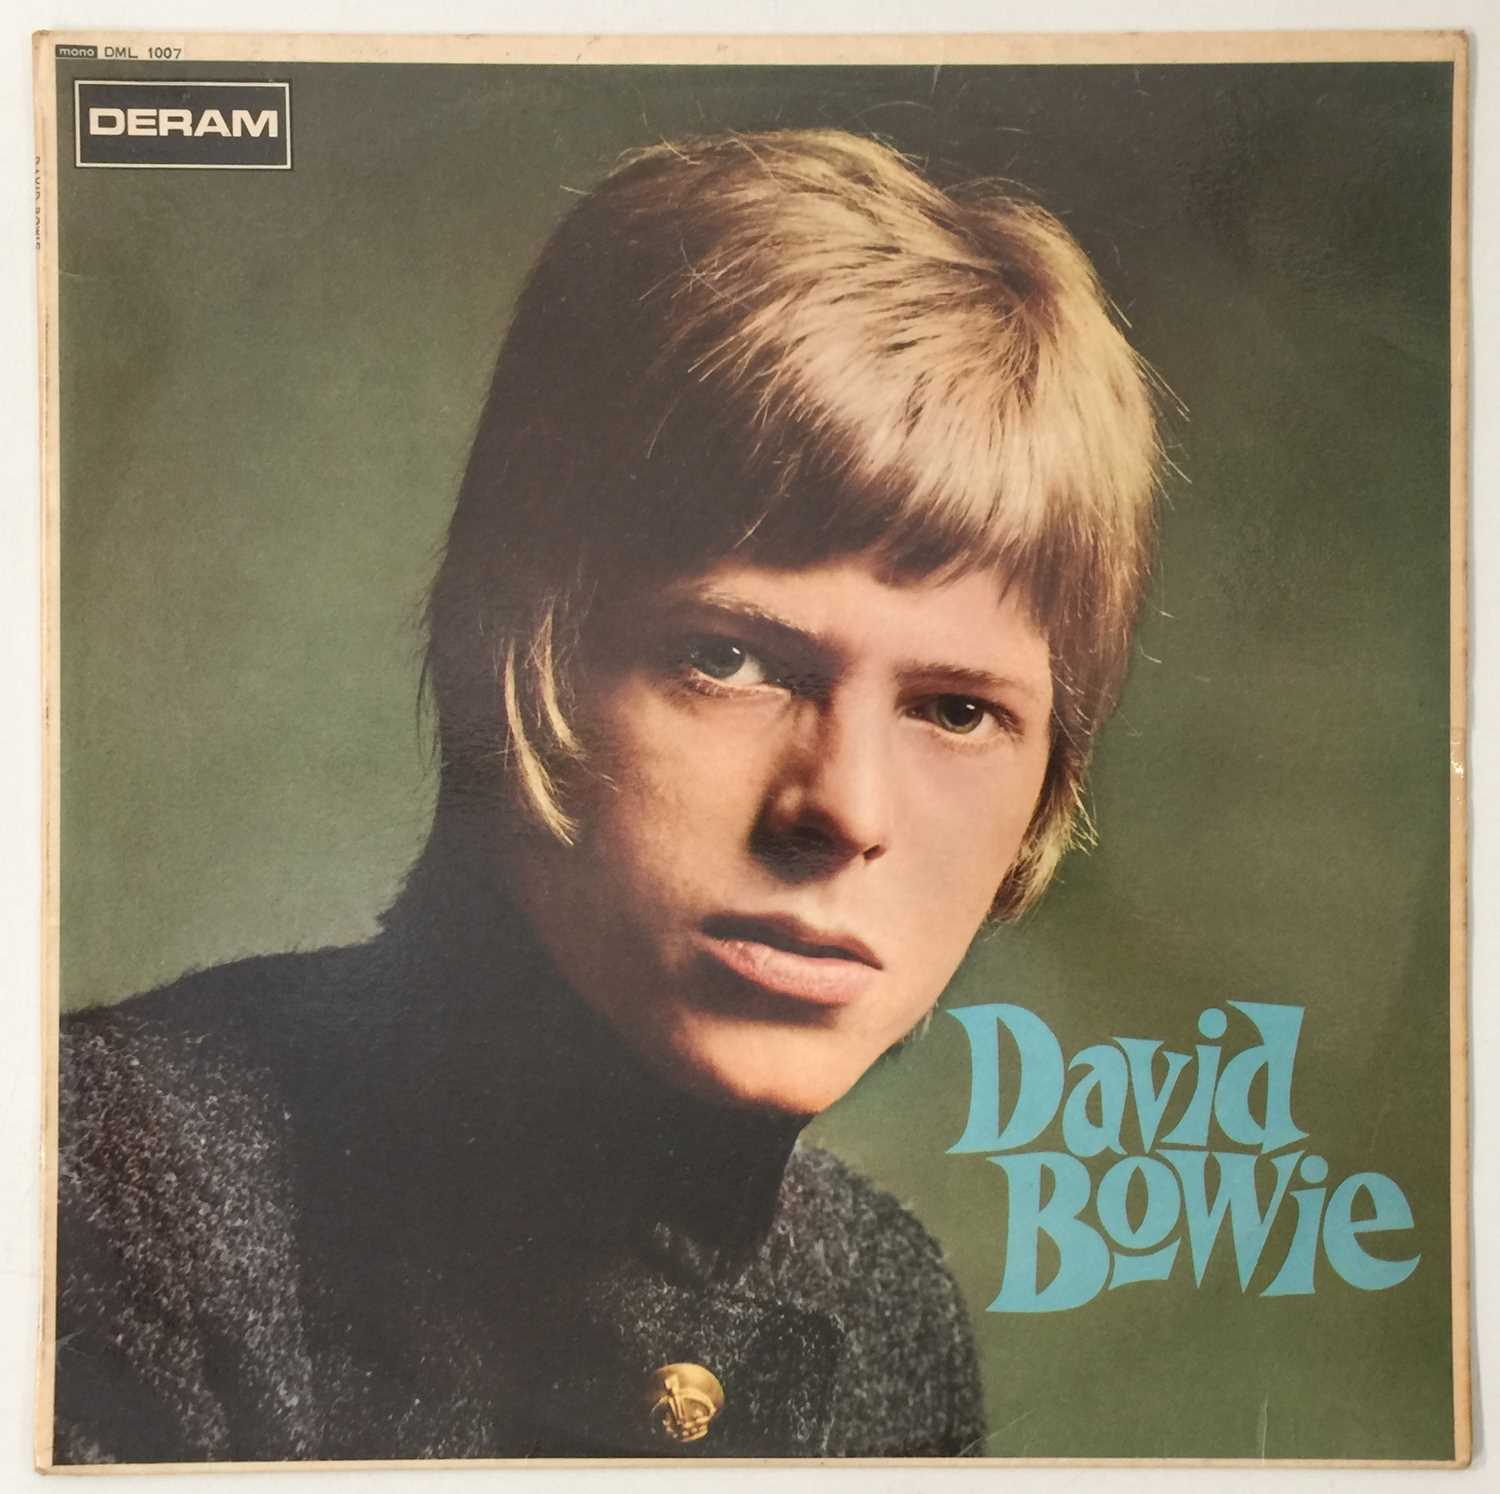 DAVID BOWIE - DAVID BOWIE LP (ORIGINAL UK MONO COPY - DERAM DML 1007) - Image 2 of 5